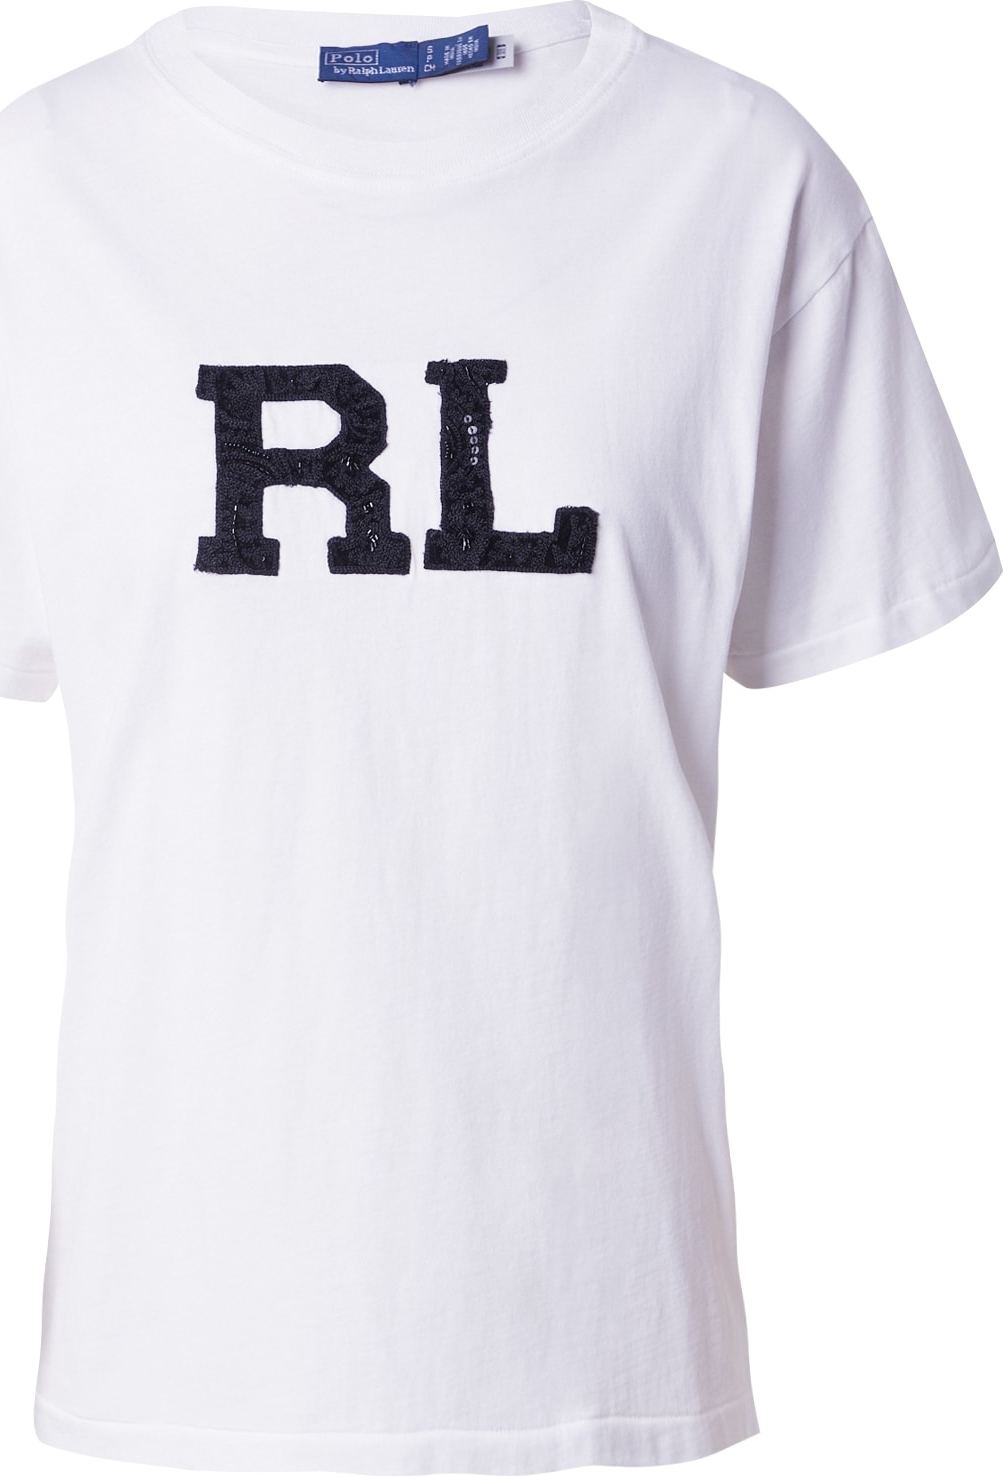 Tričko Polo Ralph Lauren černá / bílá